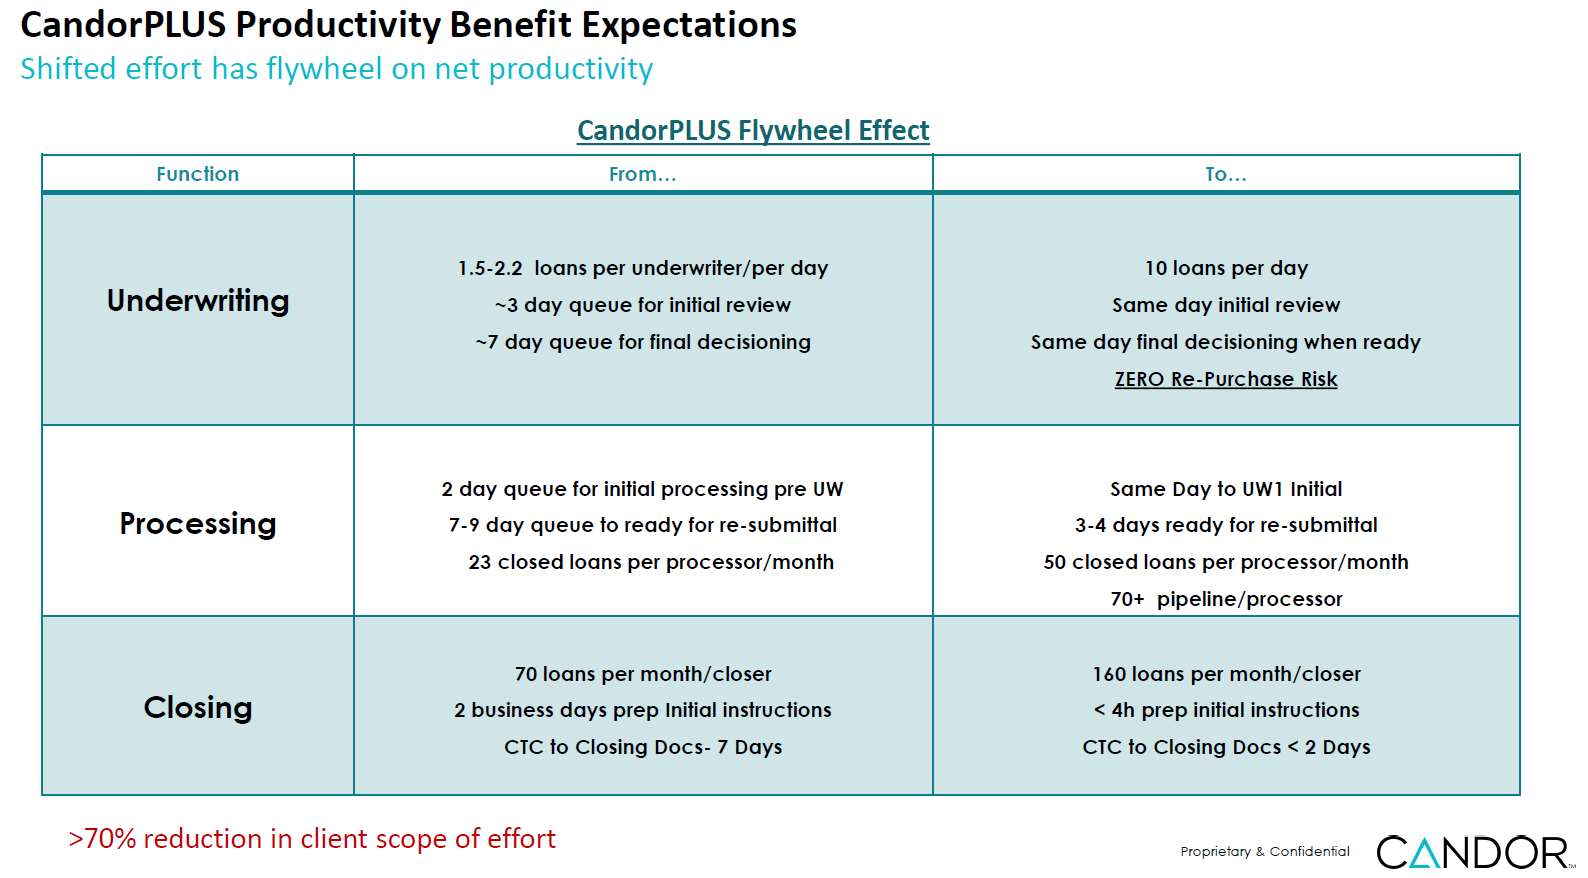 A candor plus productivity benefit expectations chart